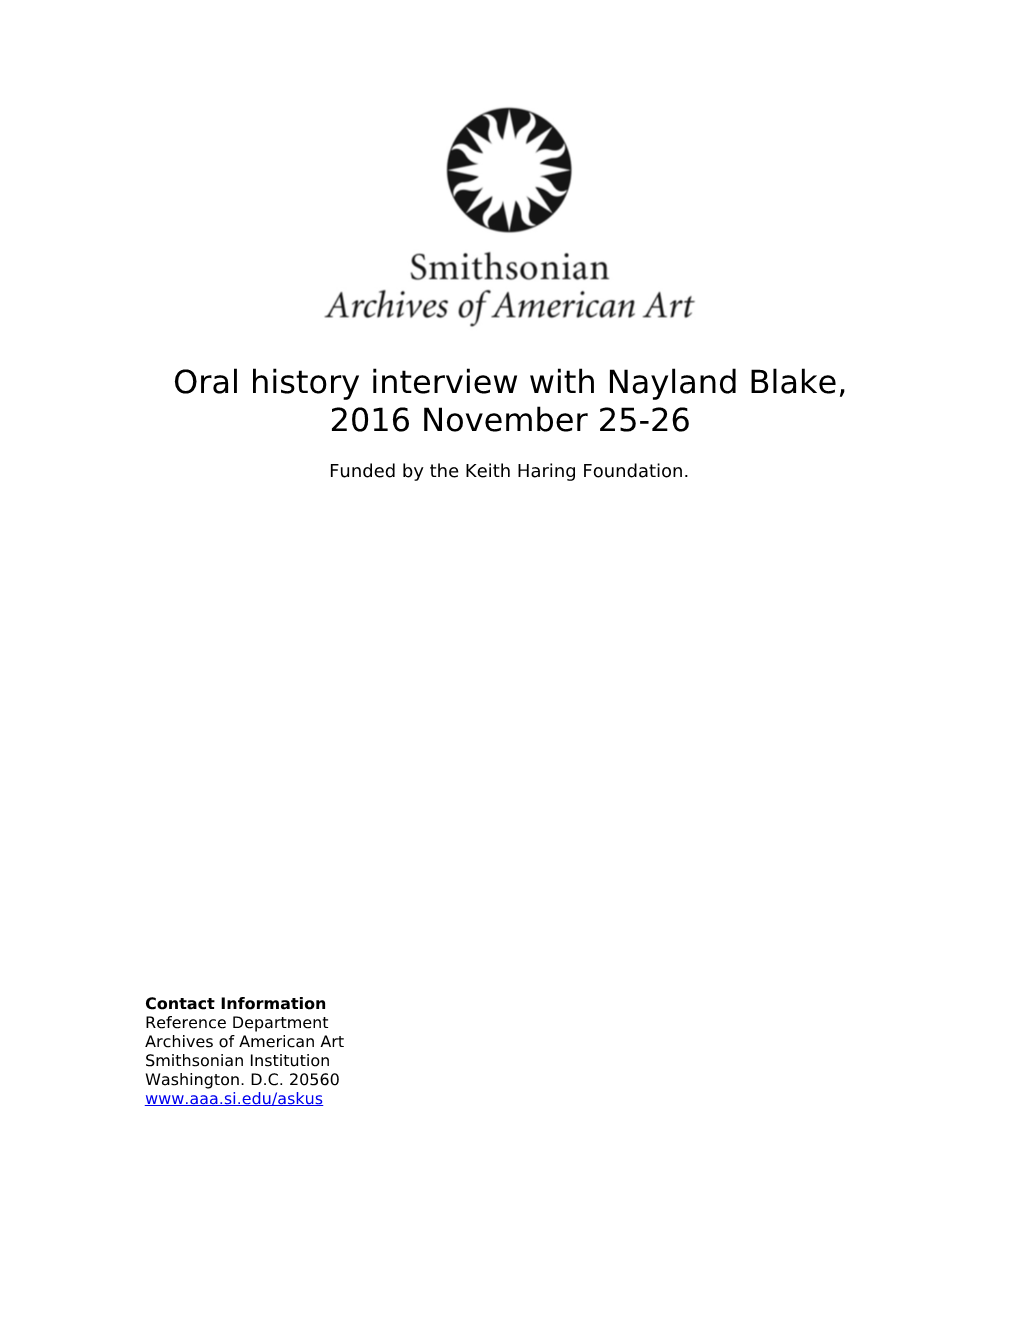 Oral History Interview with Nayland Blake, 2016 November 25-26